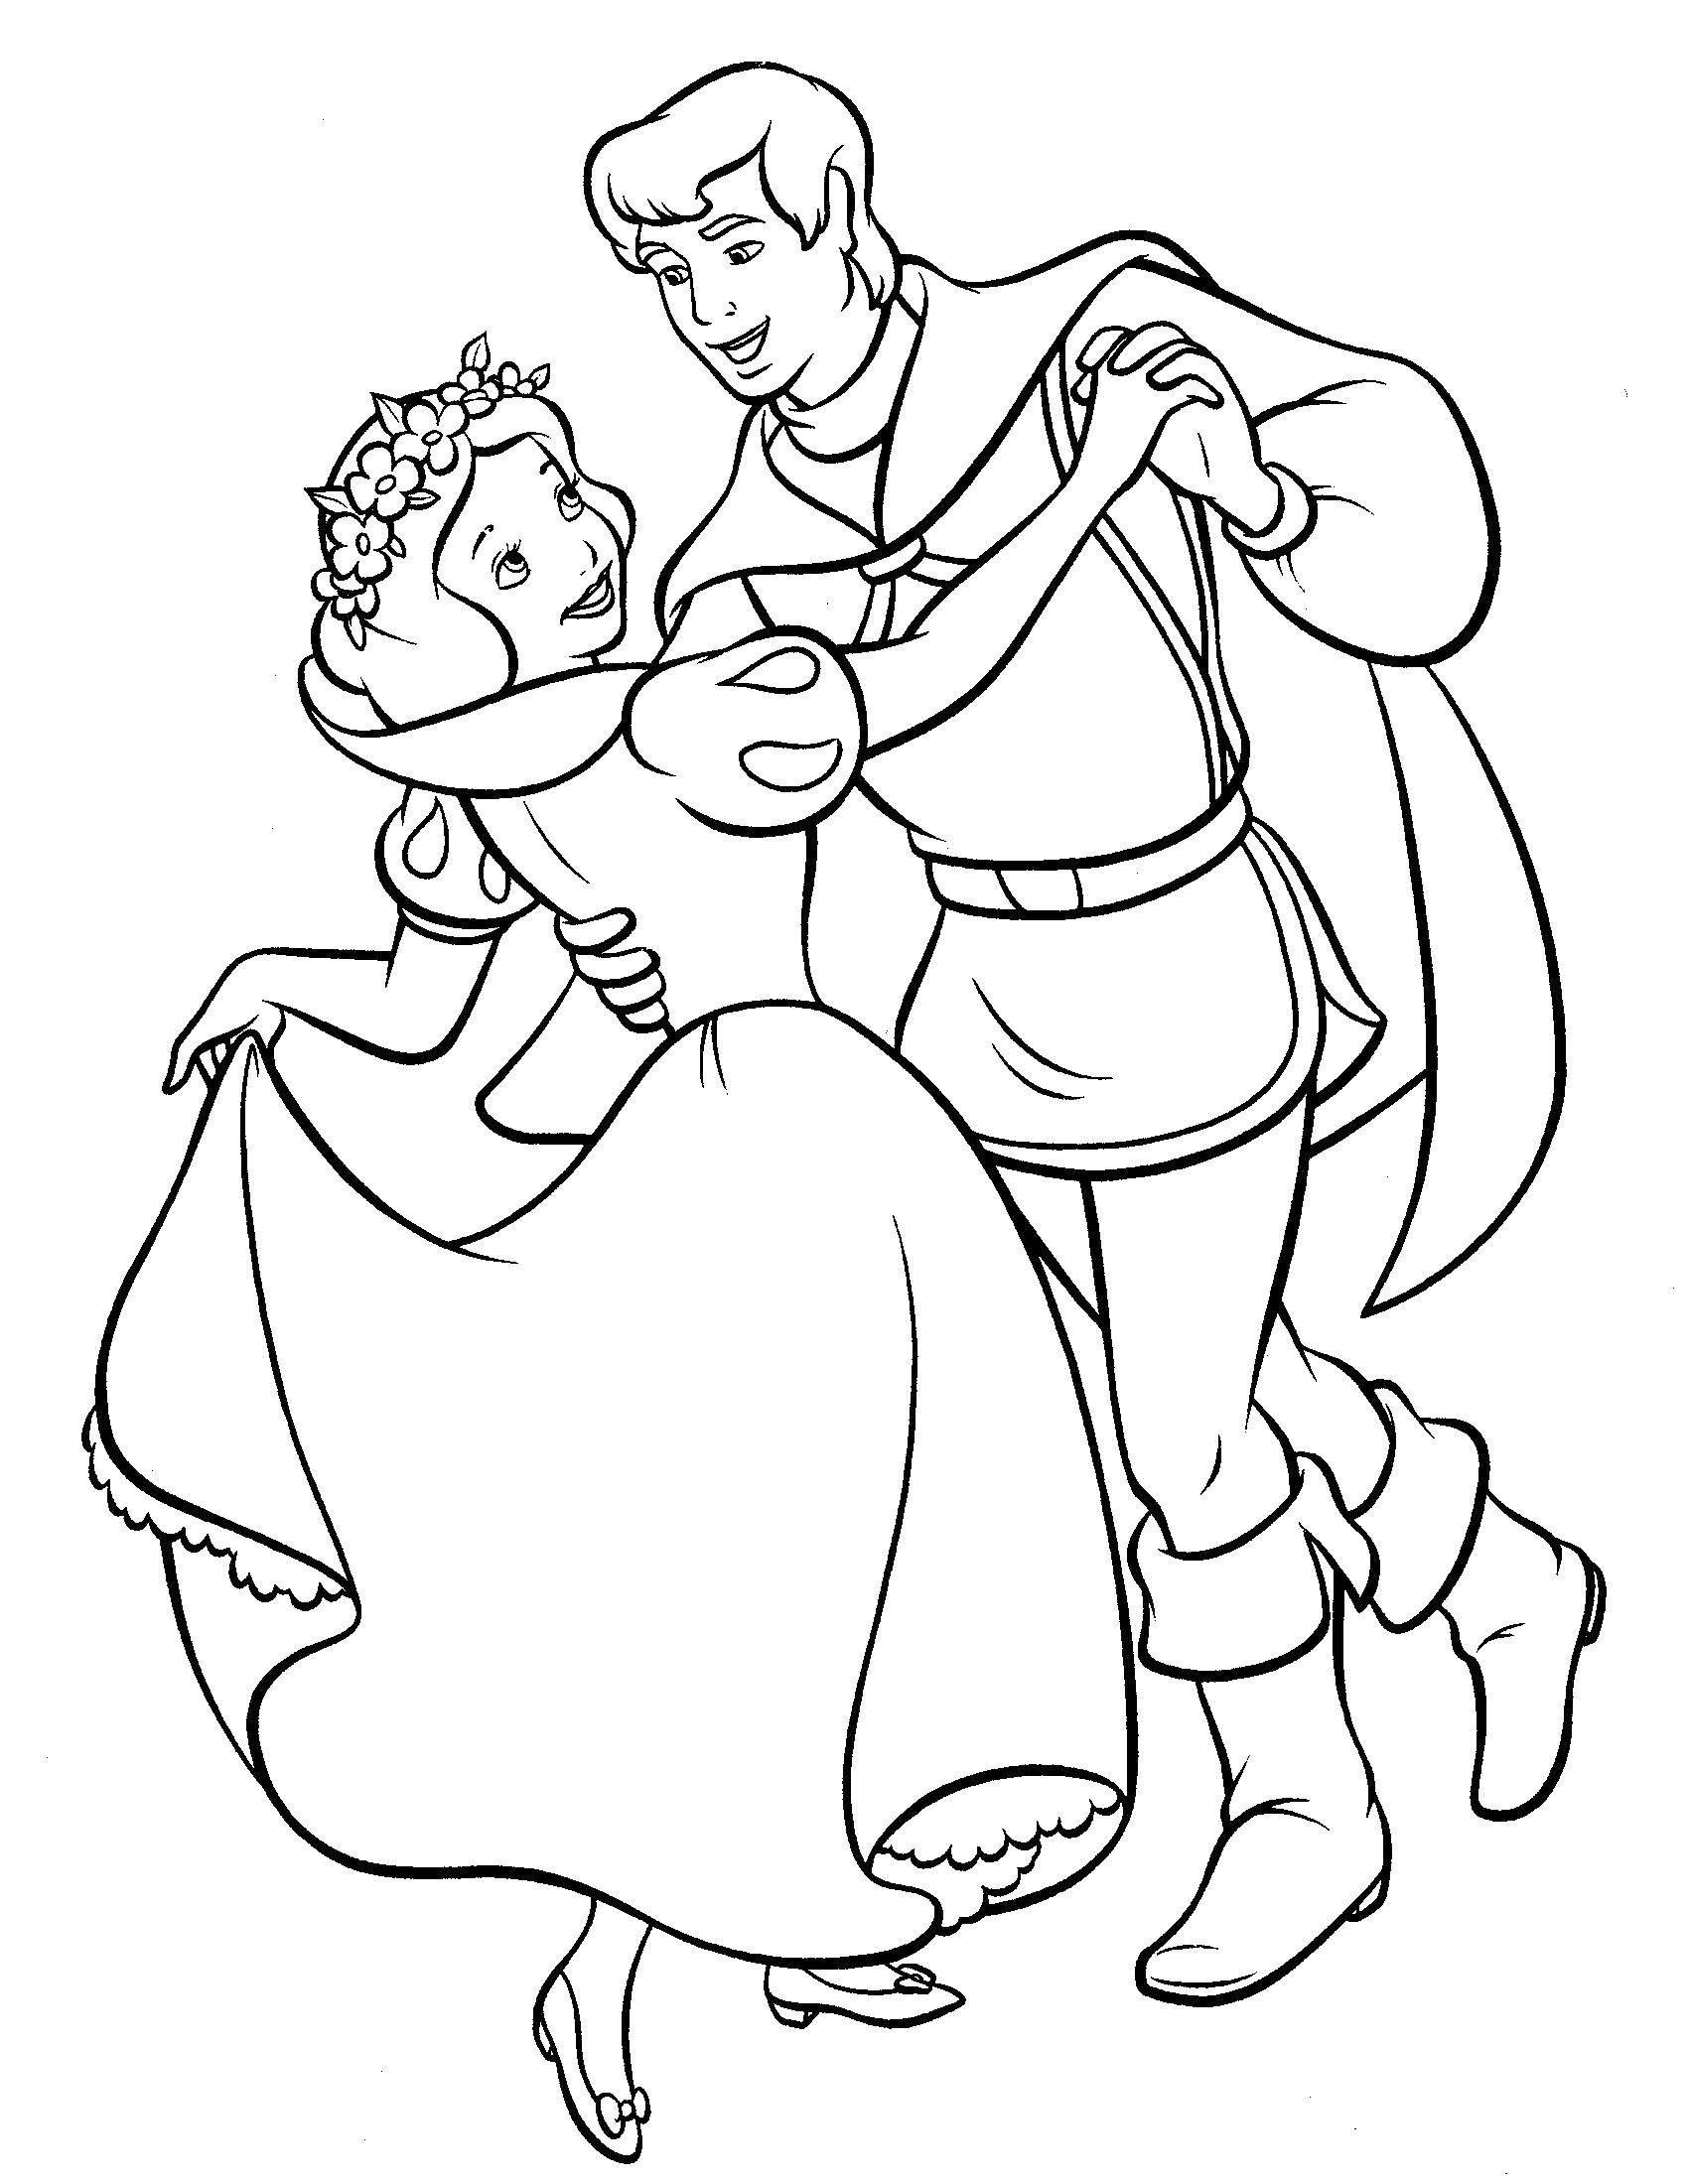 Название: Раскраска Белоснежка танцует с принцем. Категория: белоснежка. Теги: Белоснежка, принцессы, мультфильмы, сказки.